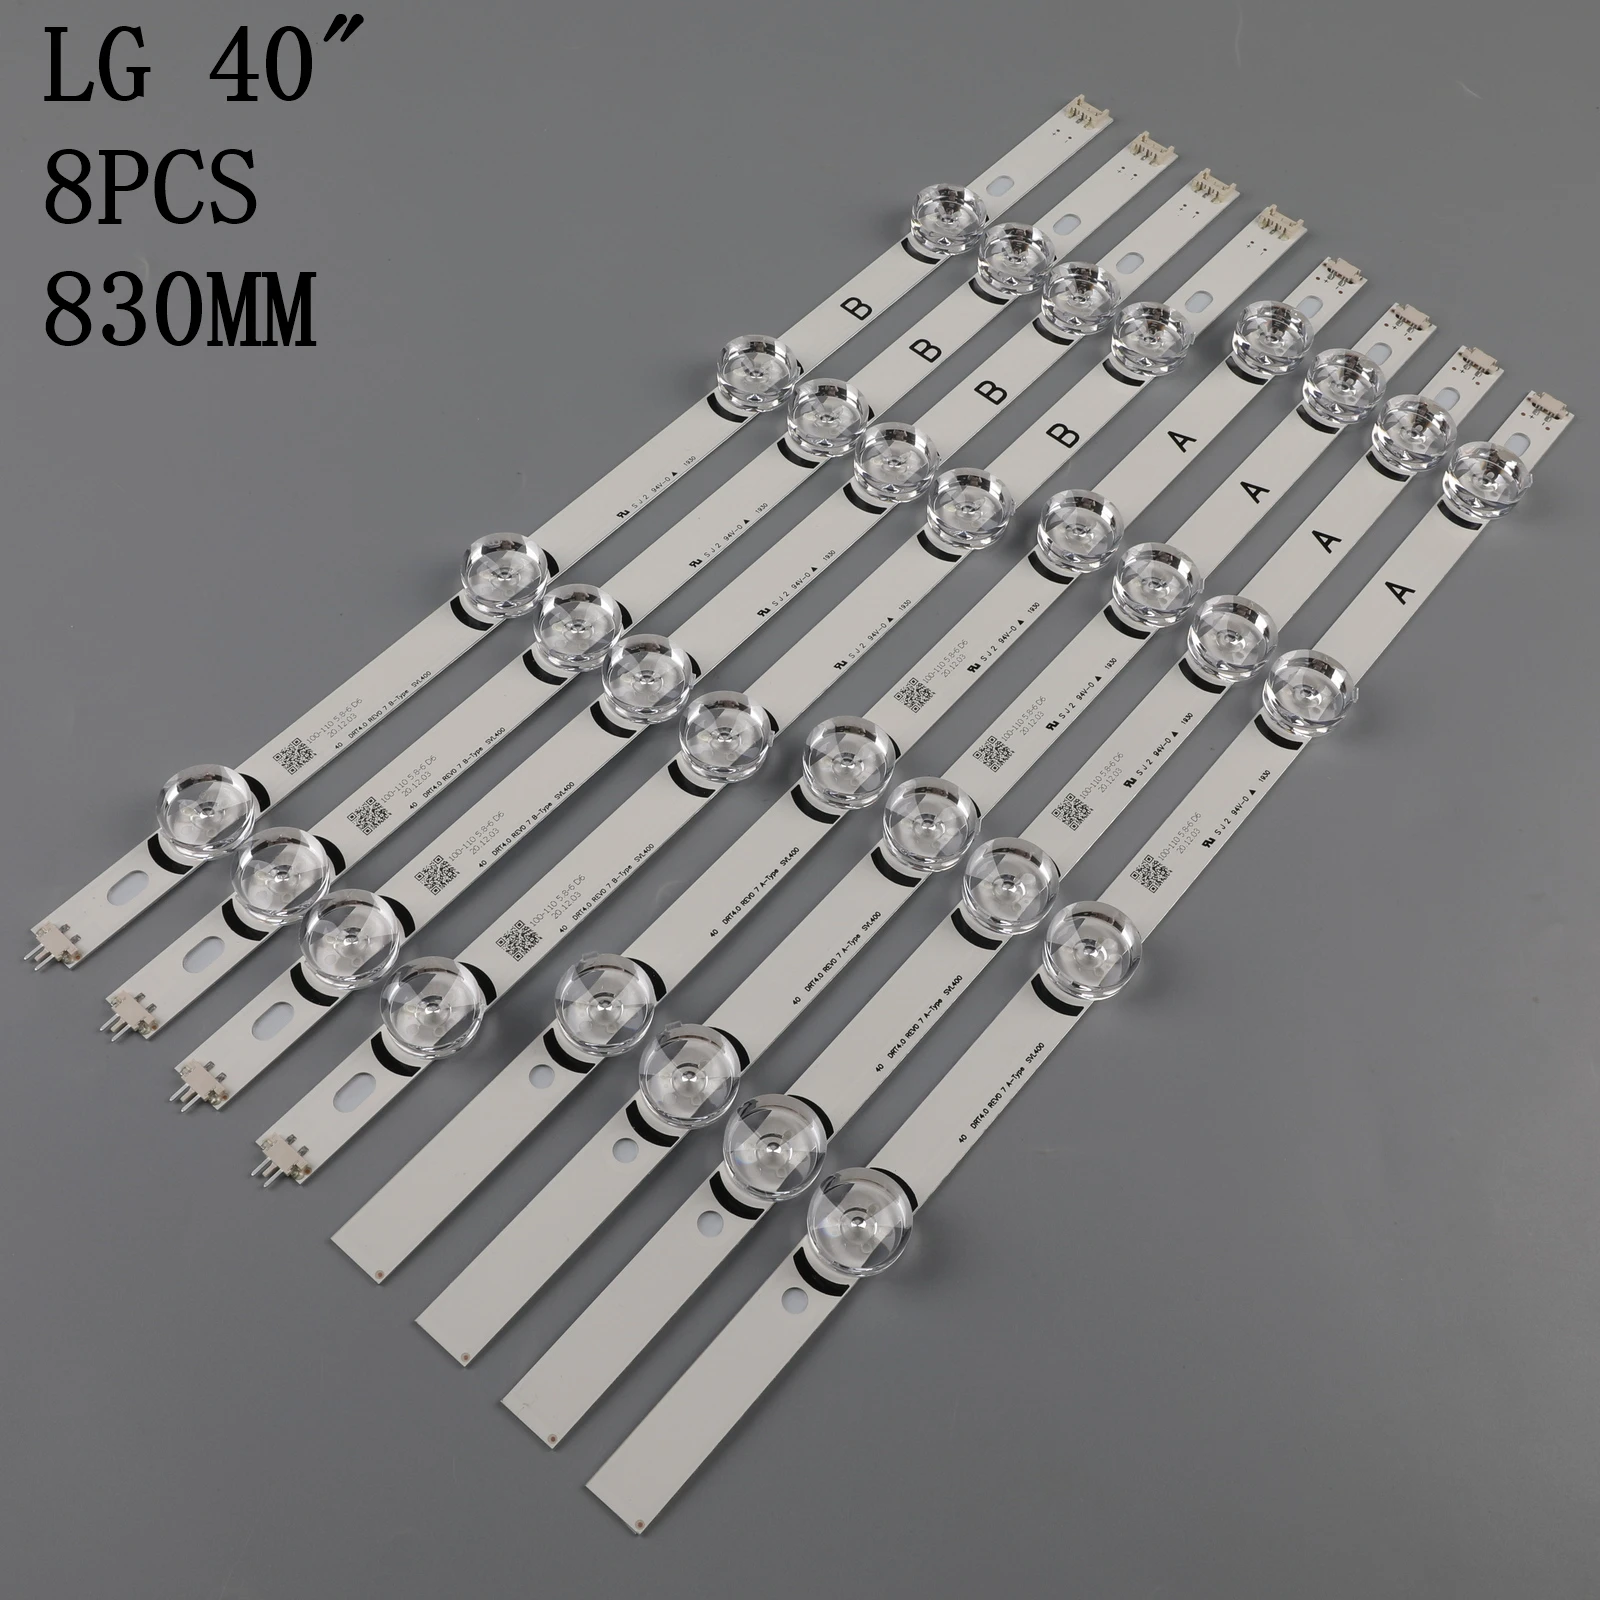 

8pcs/set LED strip For LG 40 DRT4.0 REV0 7 A/B-Type SVL400 6916L-0884A 6916L-0885A 40LF630V 40LX560H 40LH5300 40LH5700 40LF570V